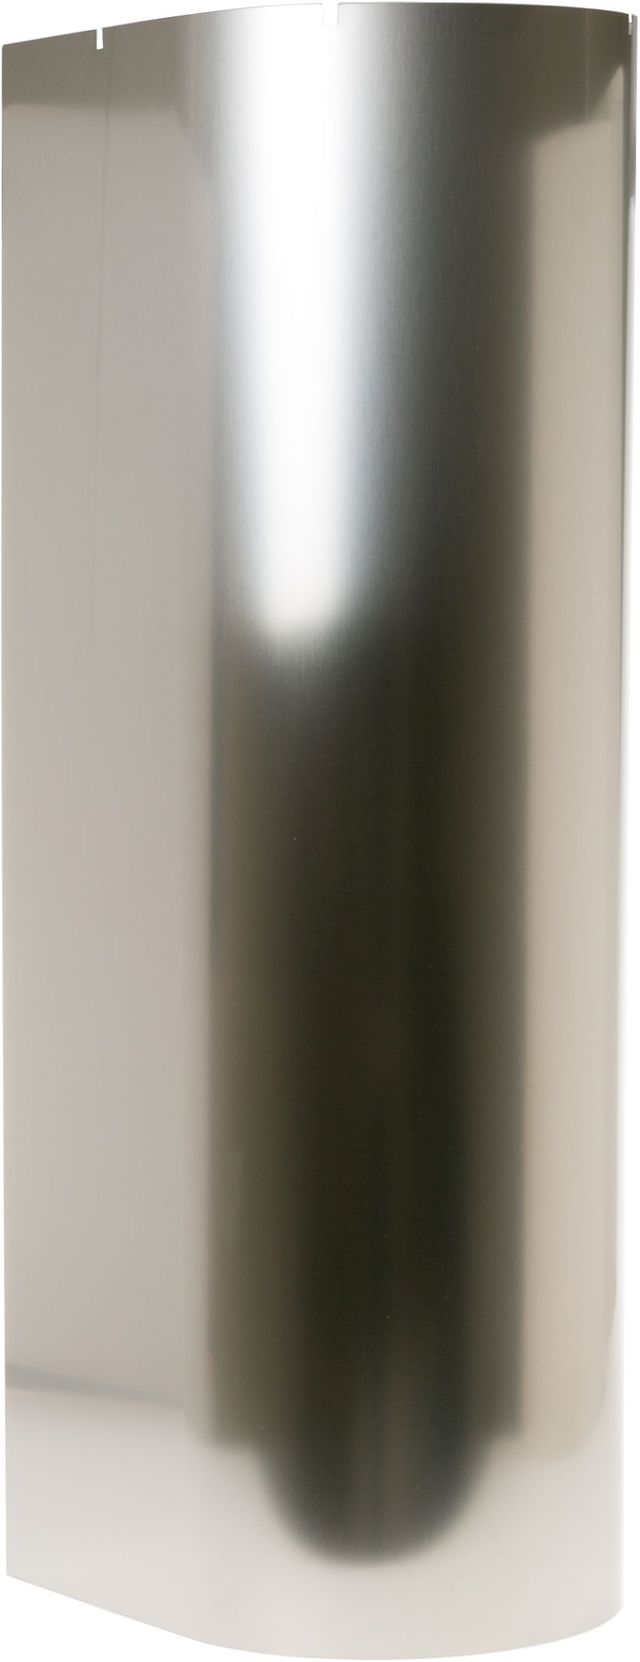 Monogram® 9-10' Ceiling Duct Cover-0